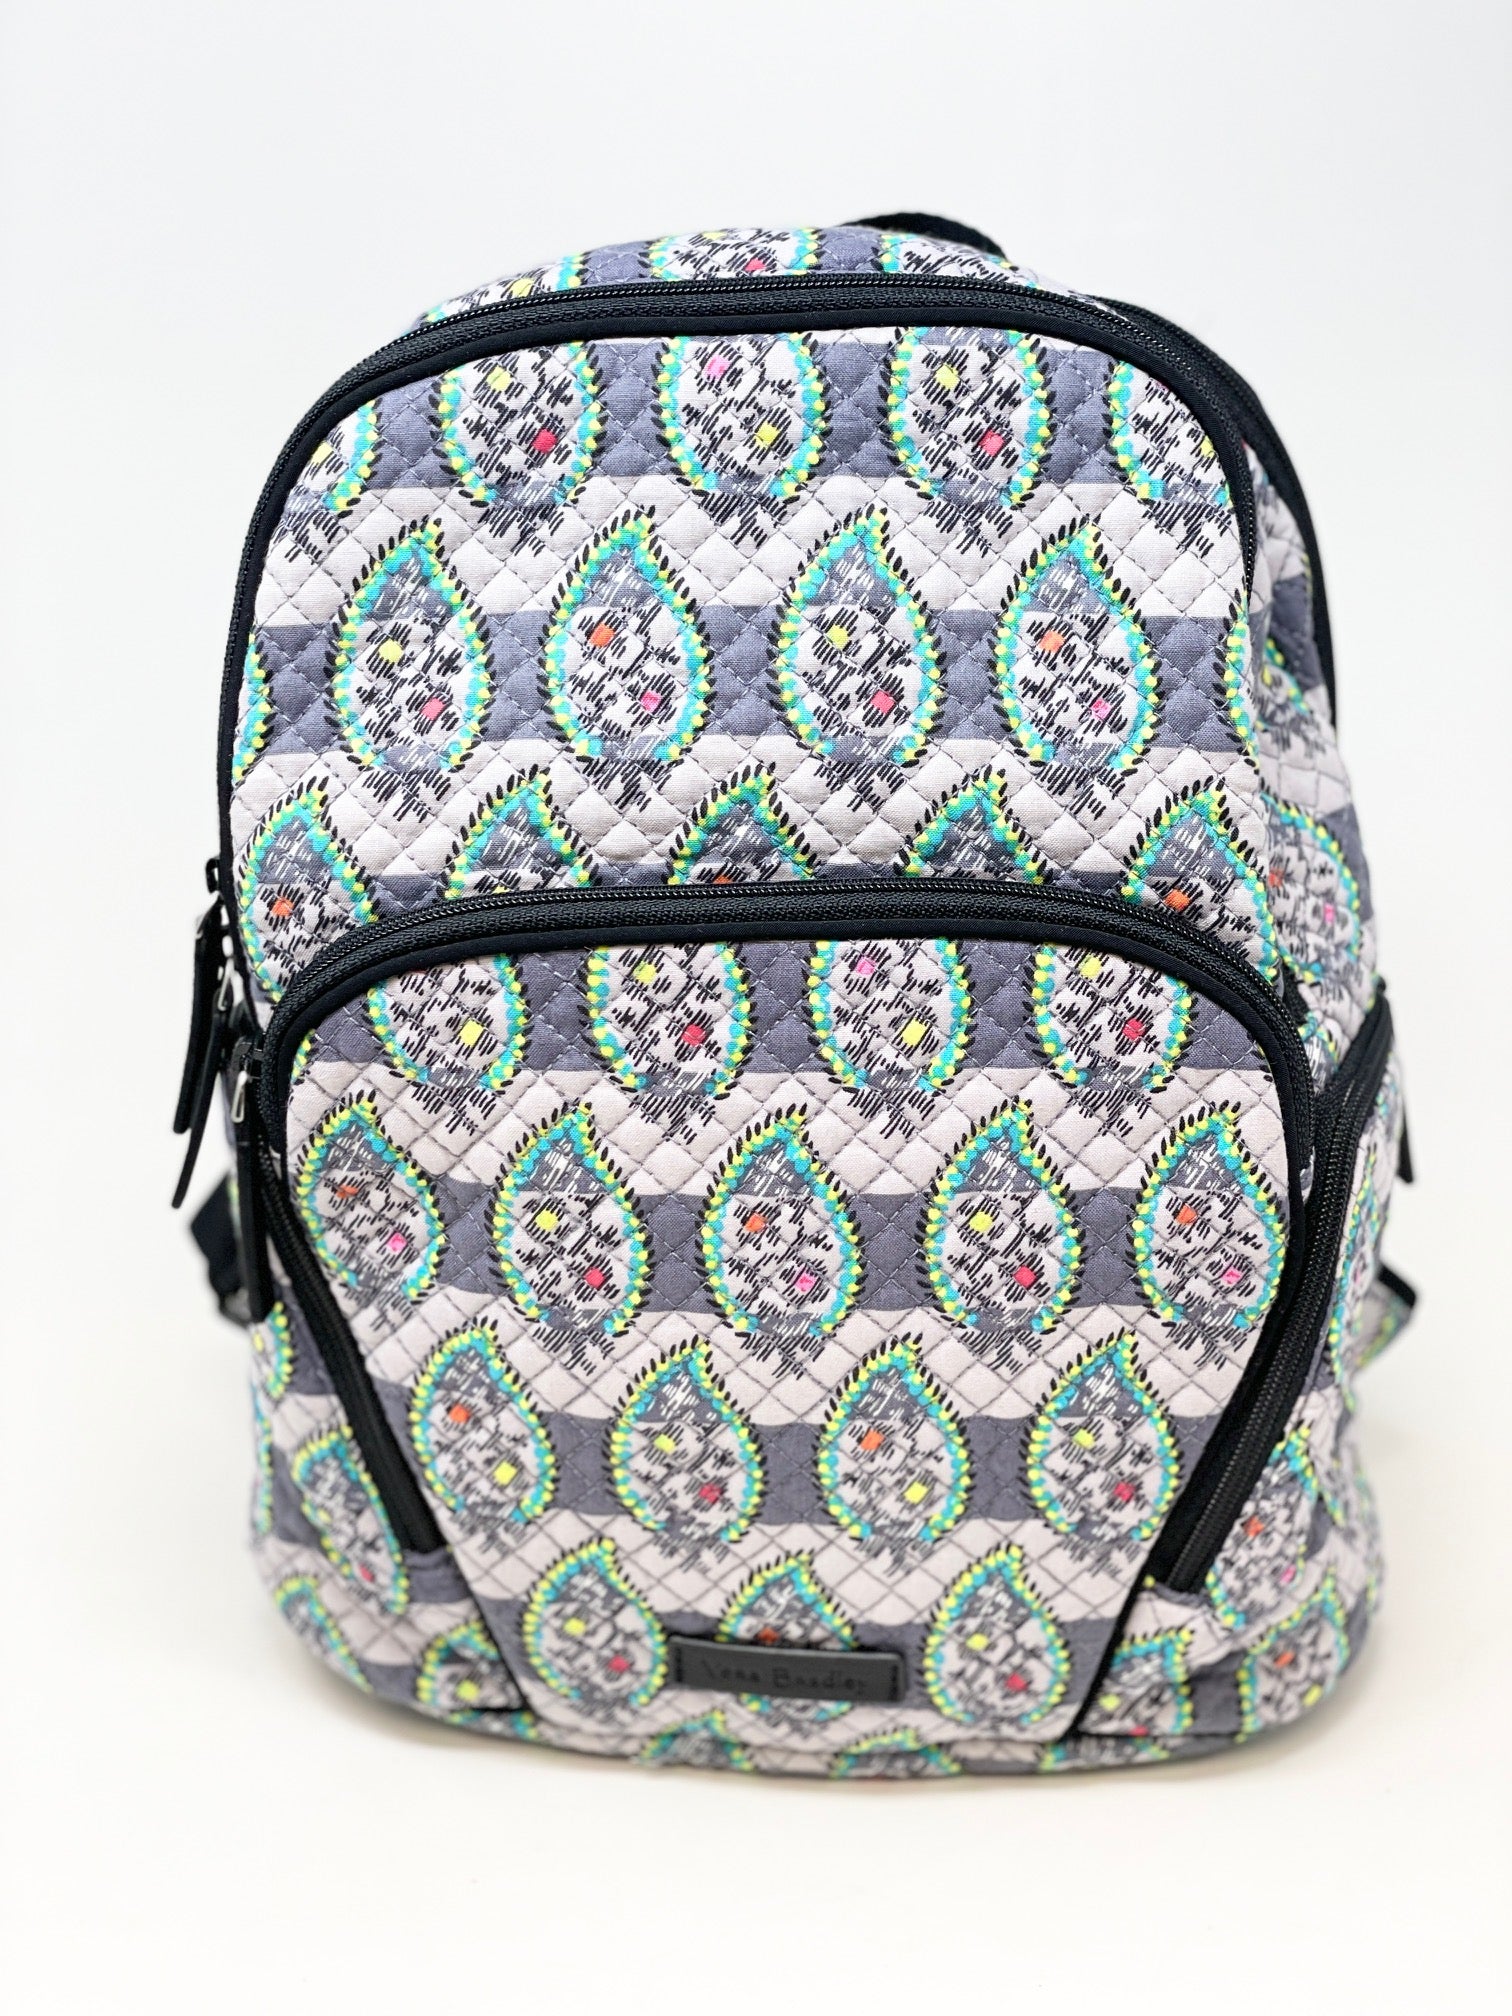 Vera Bradley Baby Backpack Diaper Bag Review: 4 Things Moms Love About This Vera  Bradley Diaper Bag - YouTube